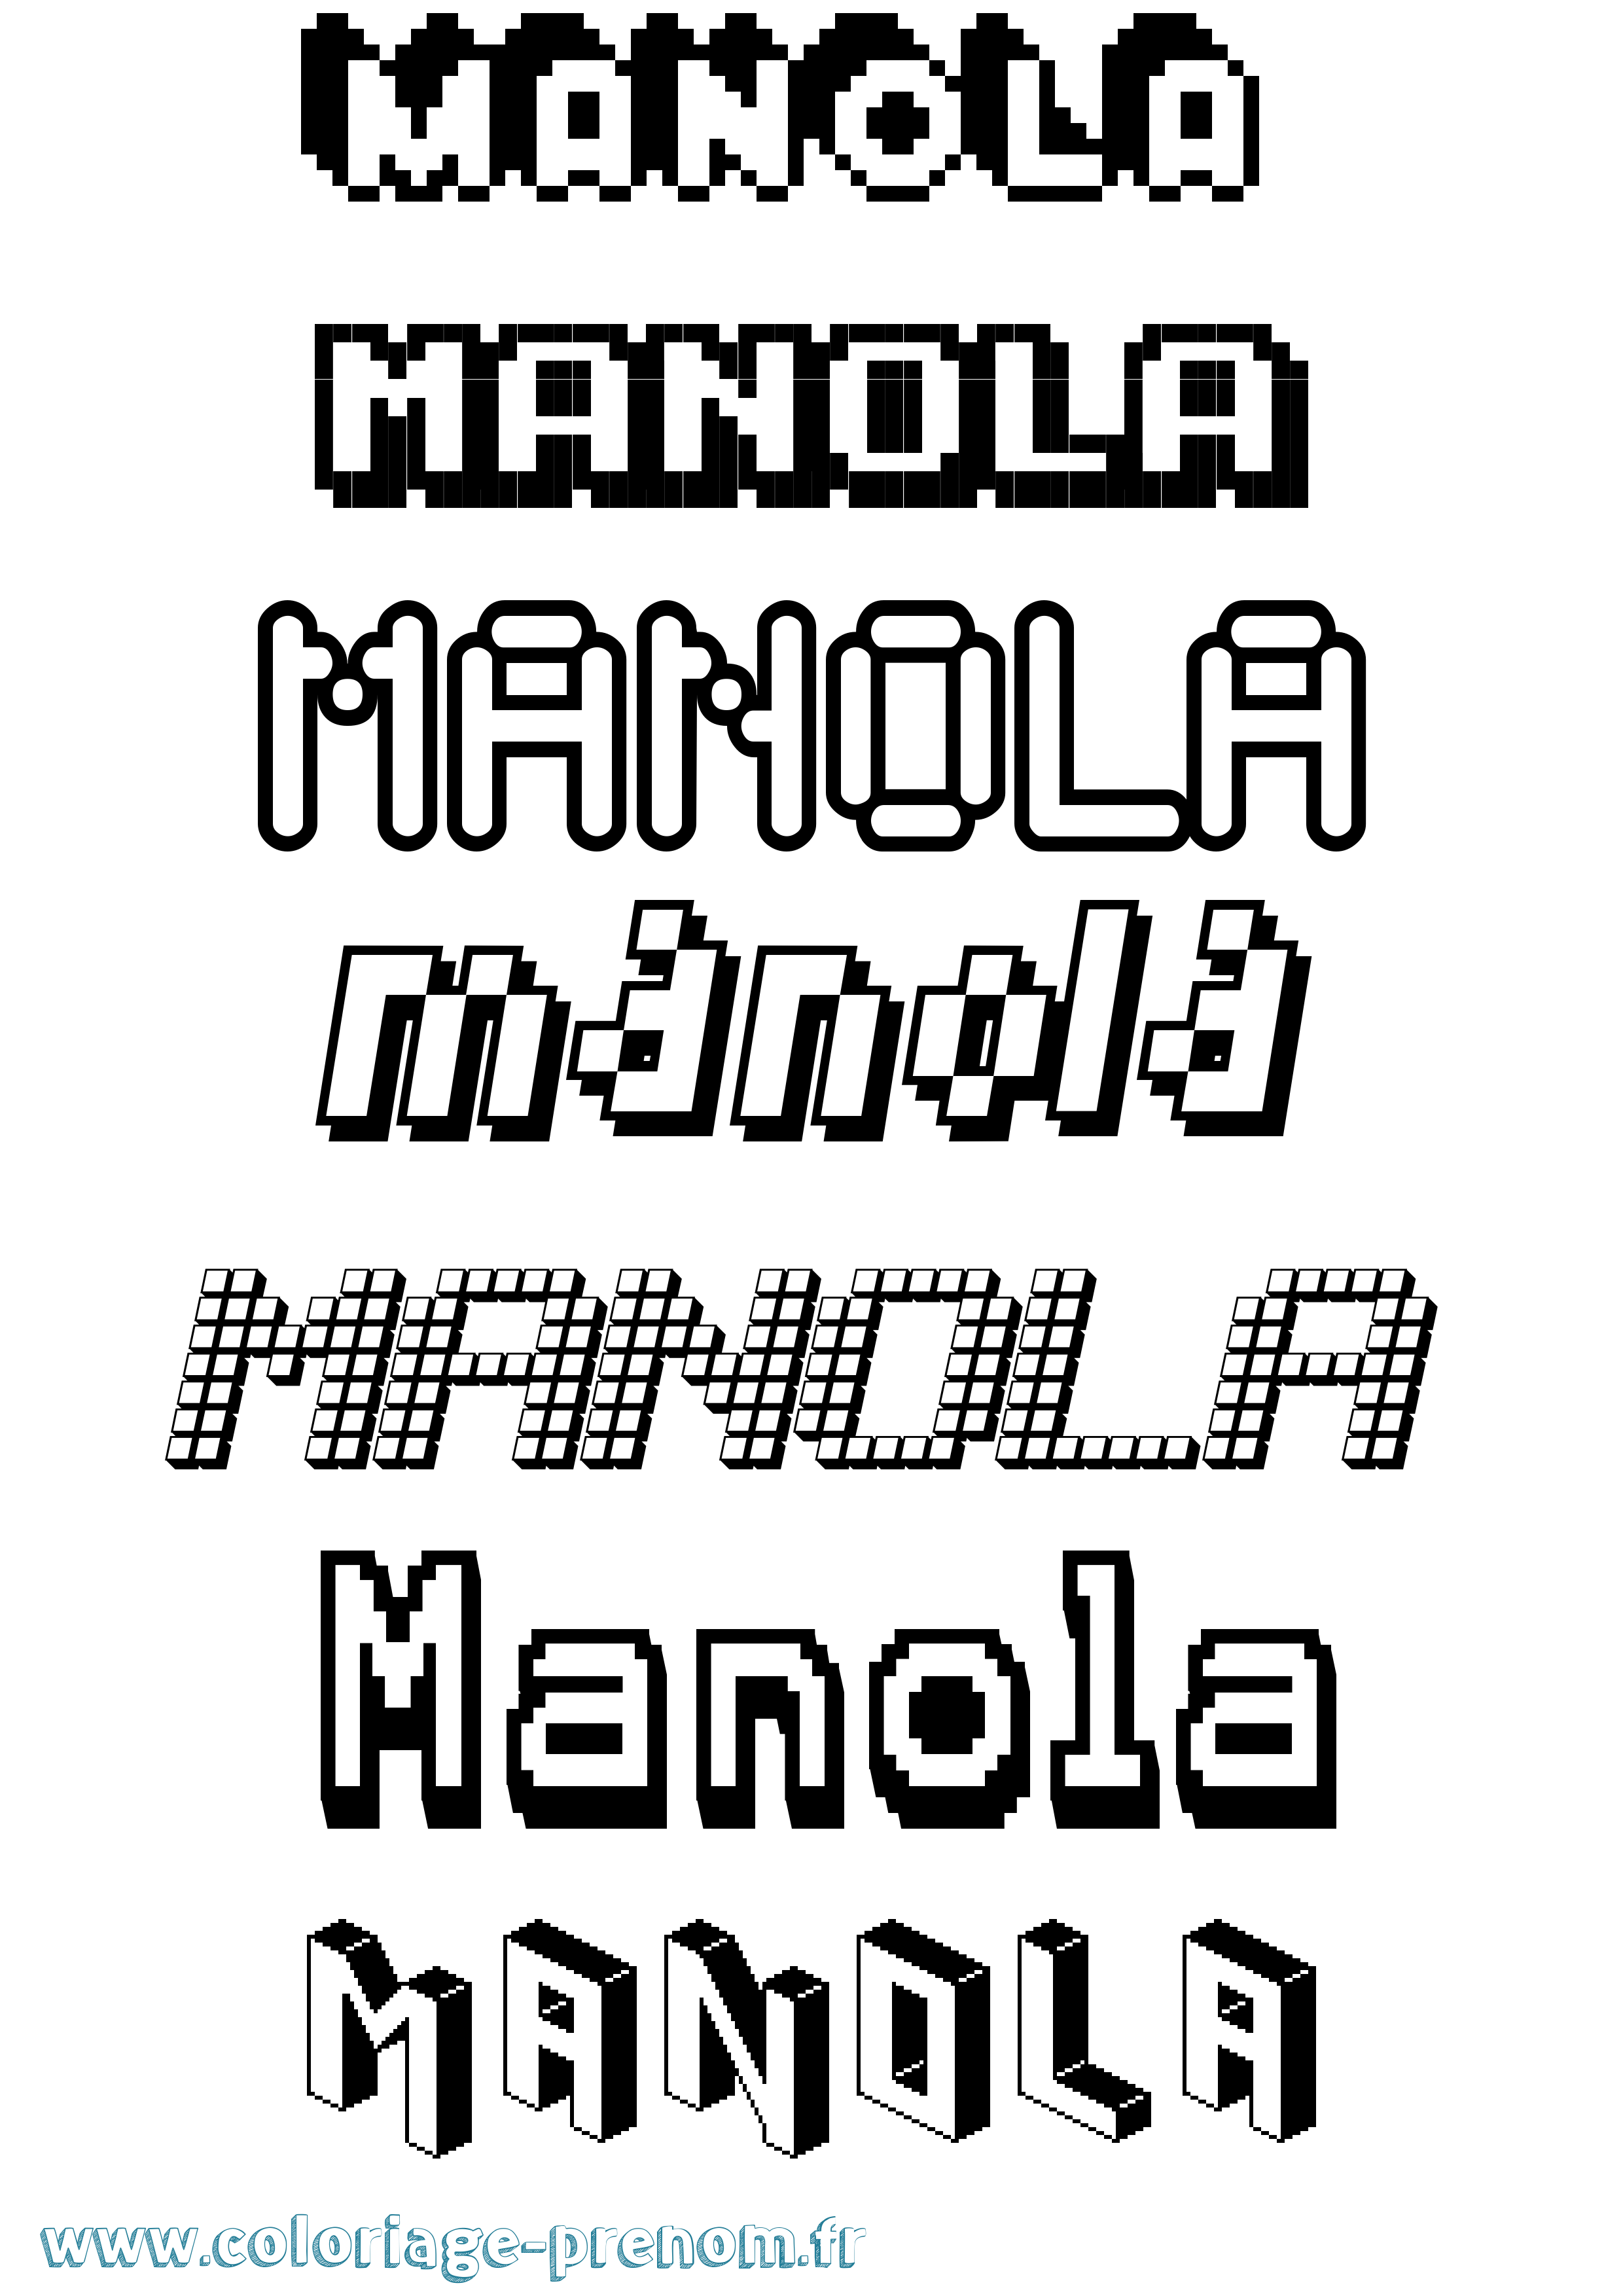 Coloriage prénom Manola Pixel